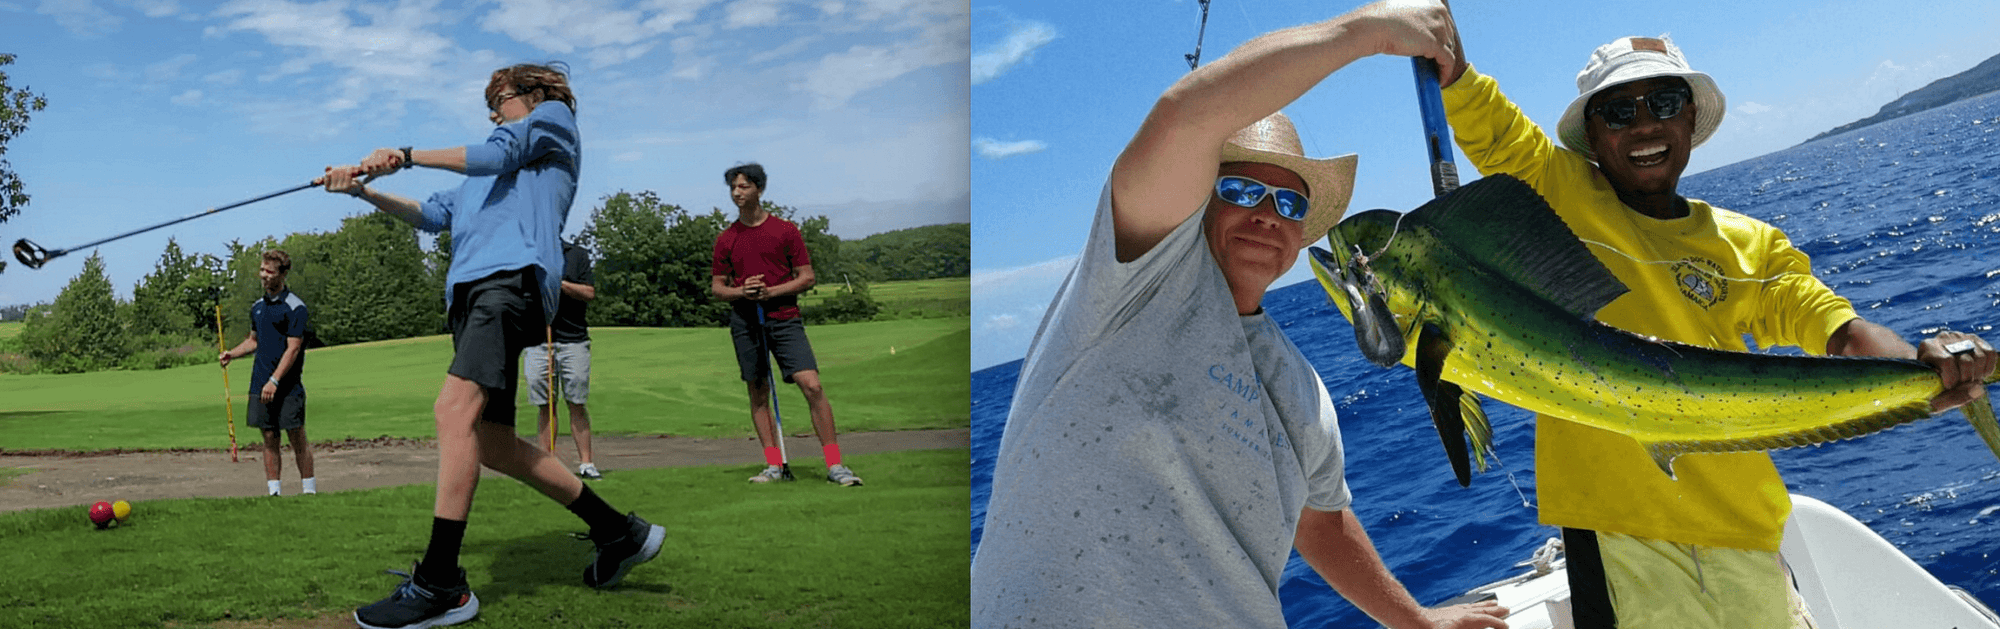 Flyfishing? Golf? Both!